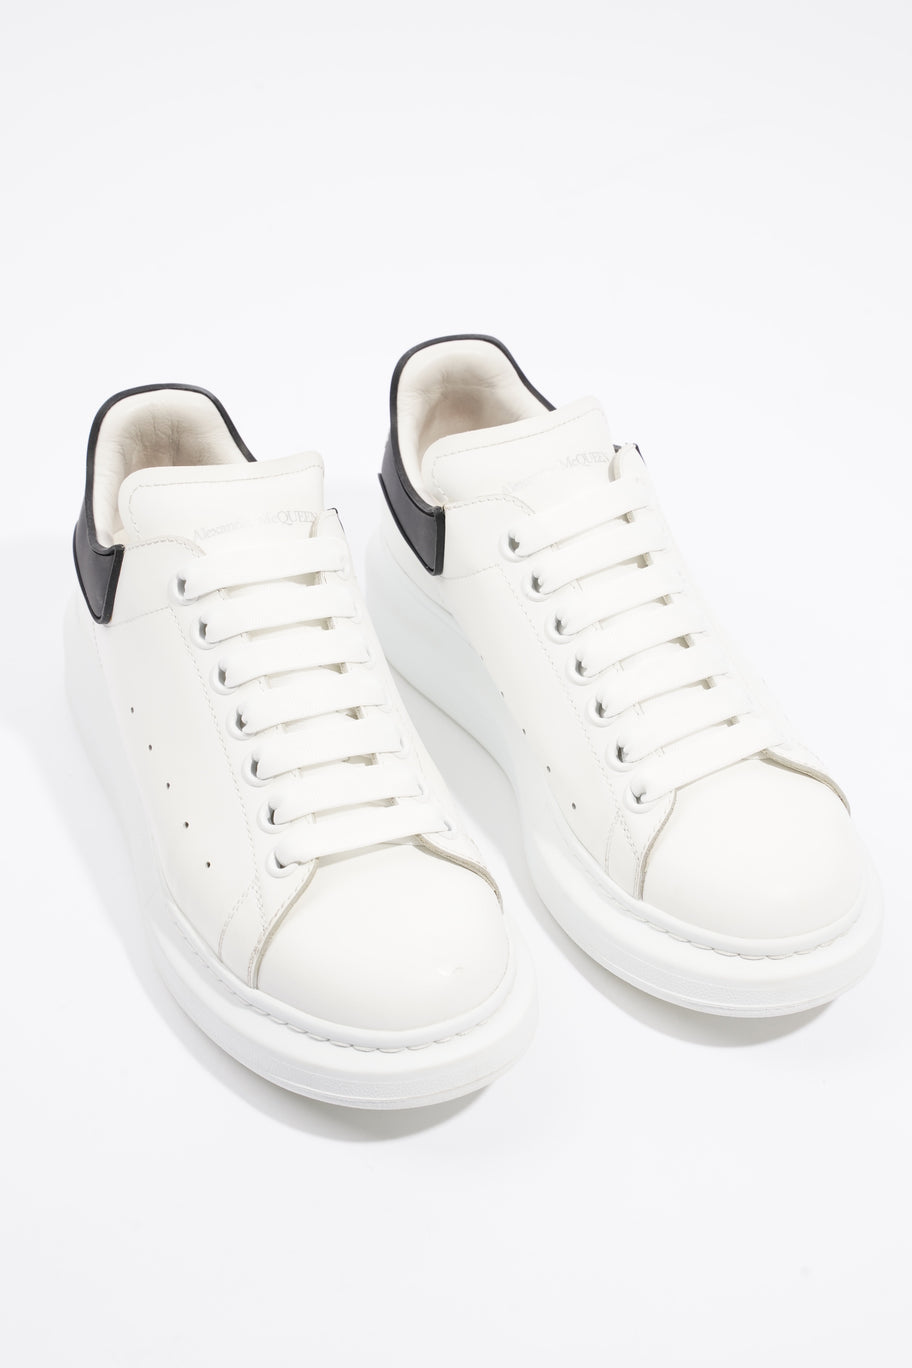 Oversized Sneaker White / Black Tab Leather EU 38 UK 5 Image 8